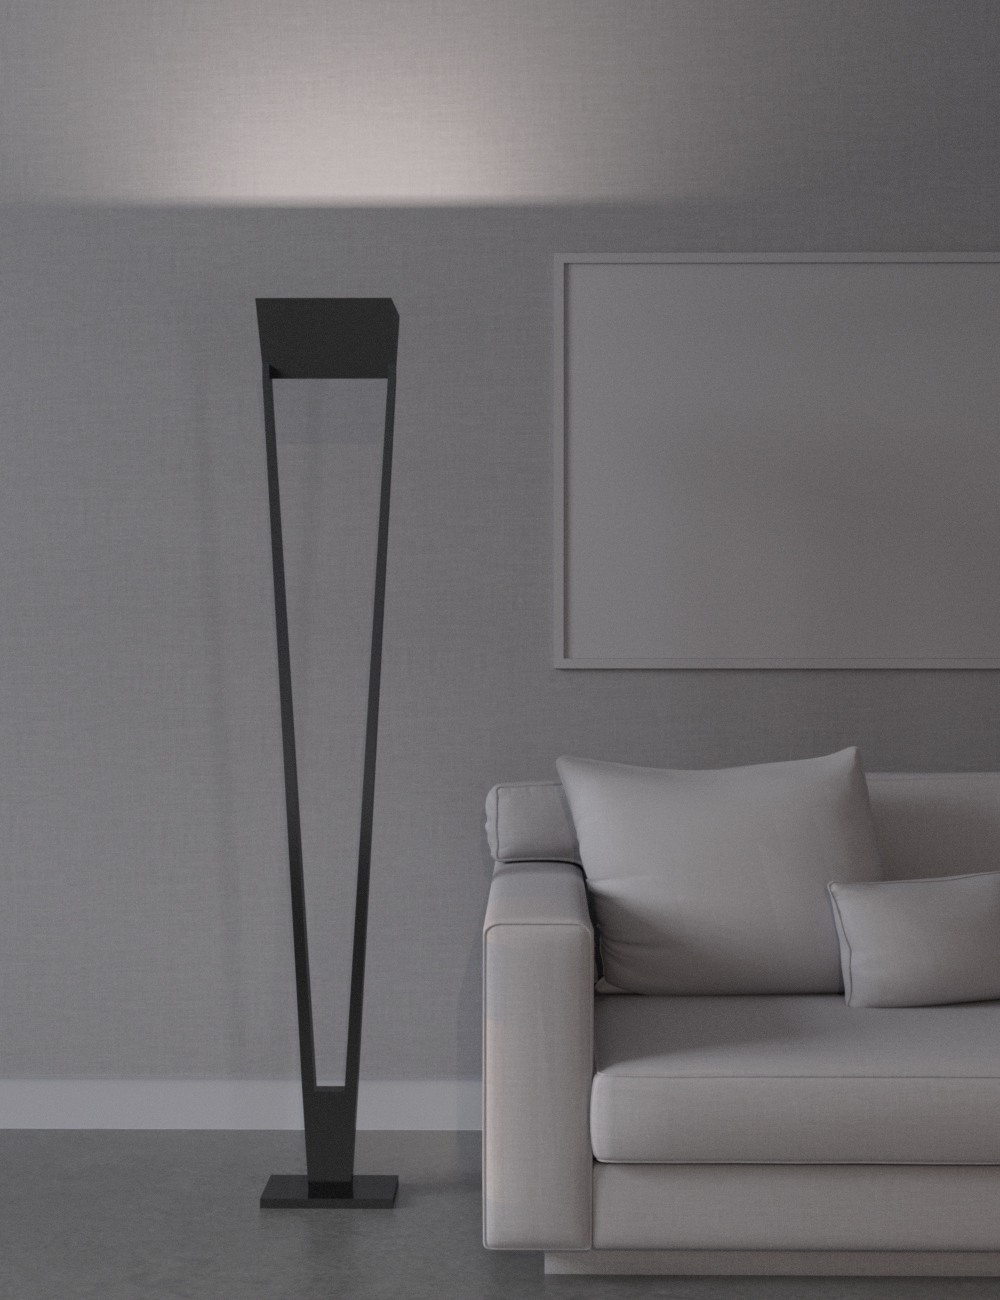 Lamp Light: Floor Lamps for Daz Studio by: Khory, 3D Models by Daz 3D